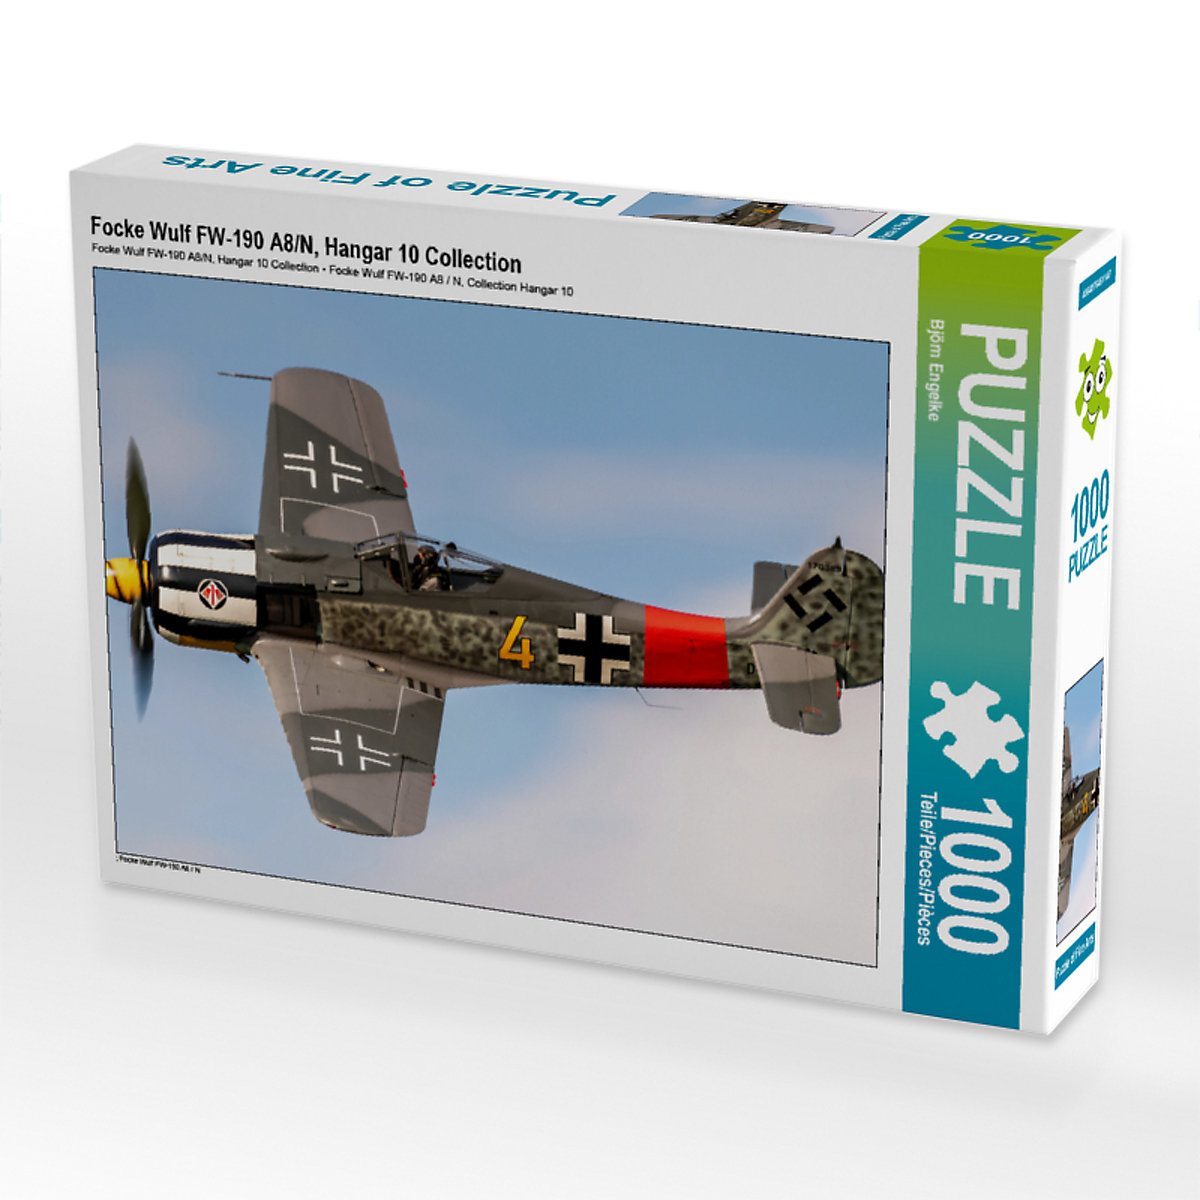 CALVENDO® Puzzle CALVENDO Puzzle Focke Wulf FW-190 A8/N Hangar 10 Collection 1000 Teile Foto-Puzzle für glückliche Stunden